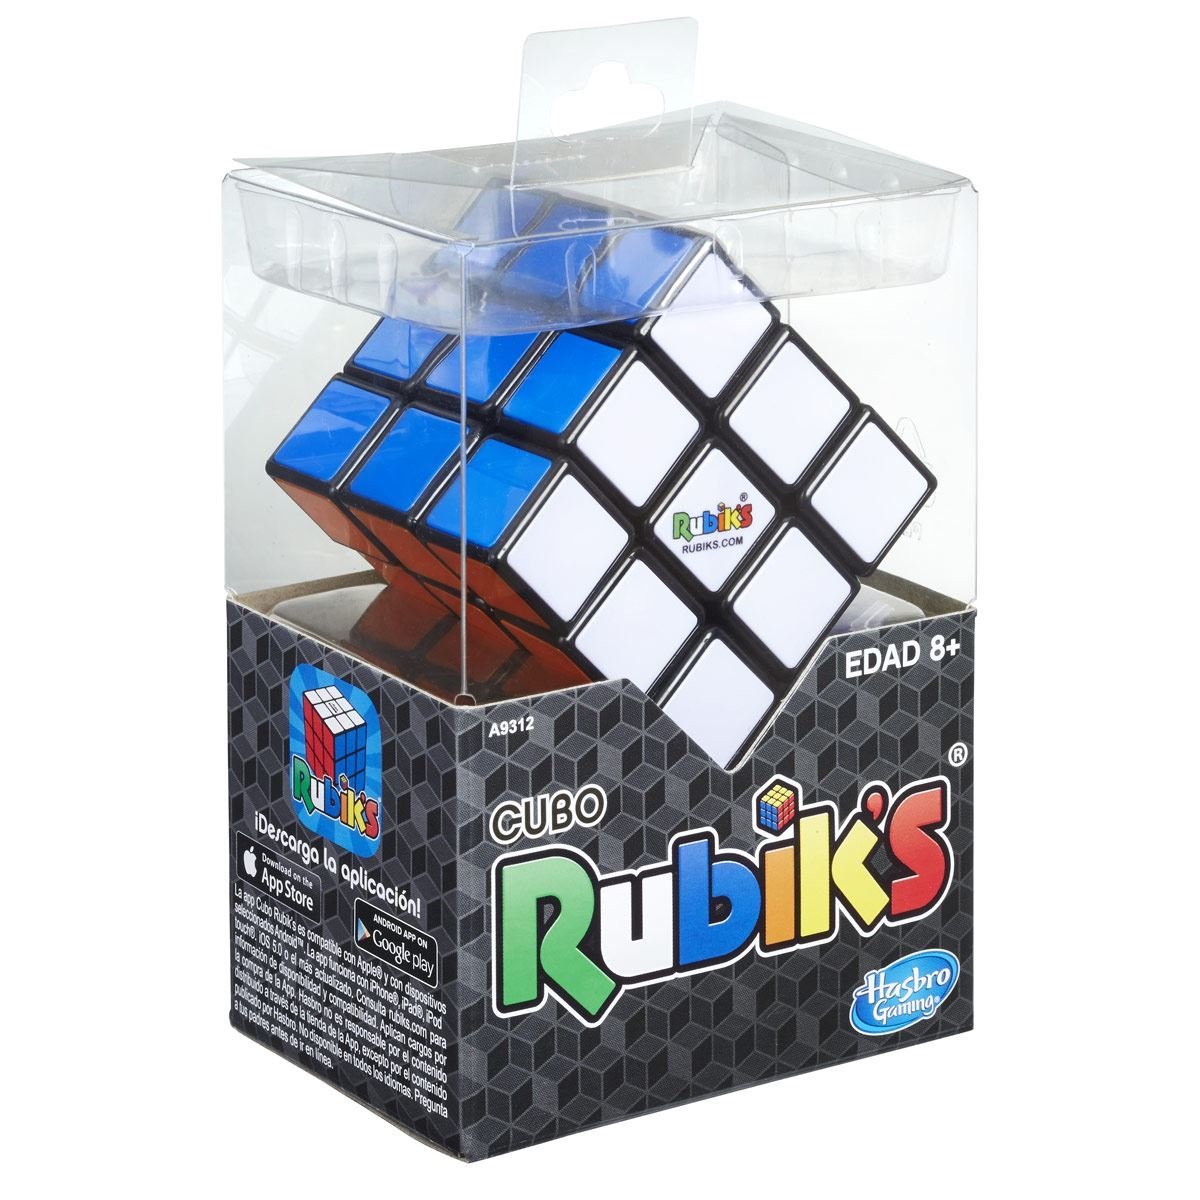 Cubo Rubik's